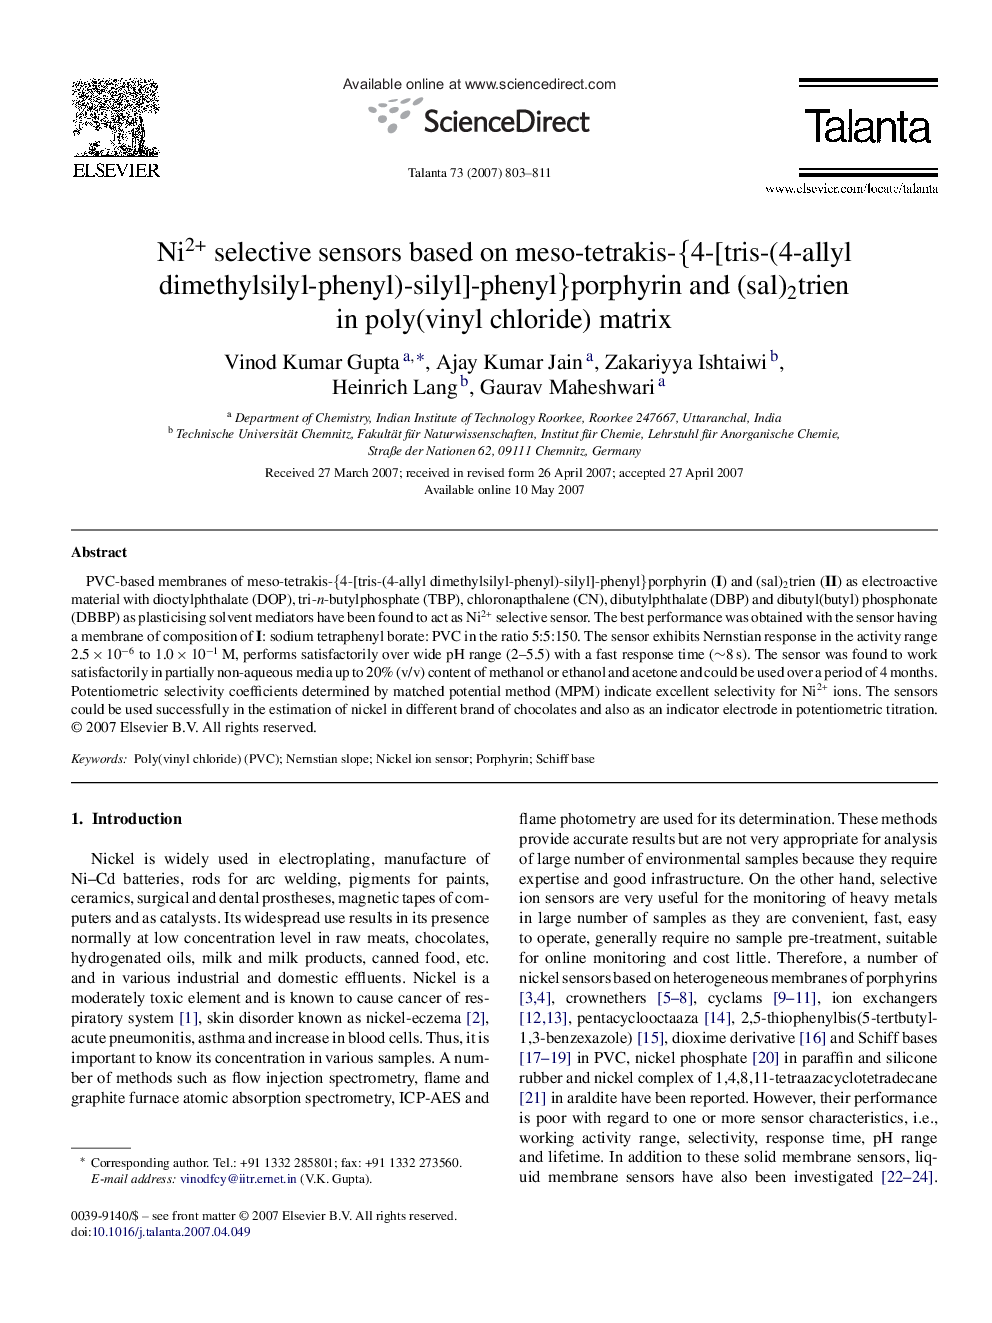 Ni2+ selective sensors based on meso-tetrakis-{4-[tris-(4-allyl dimethylsilyl-phenyl)-silyl]-phenyl}porphyrin and (sal)2trien in poly(vinyl chloride) matrix